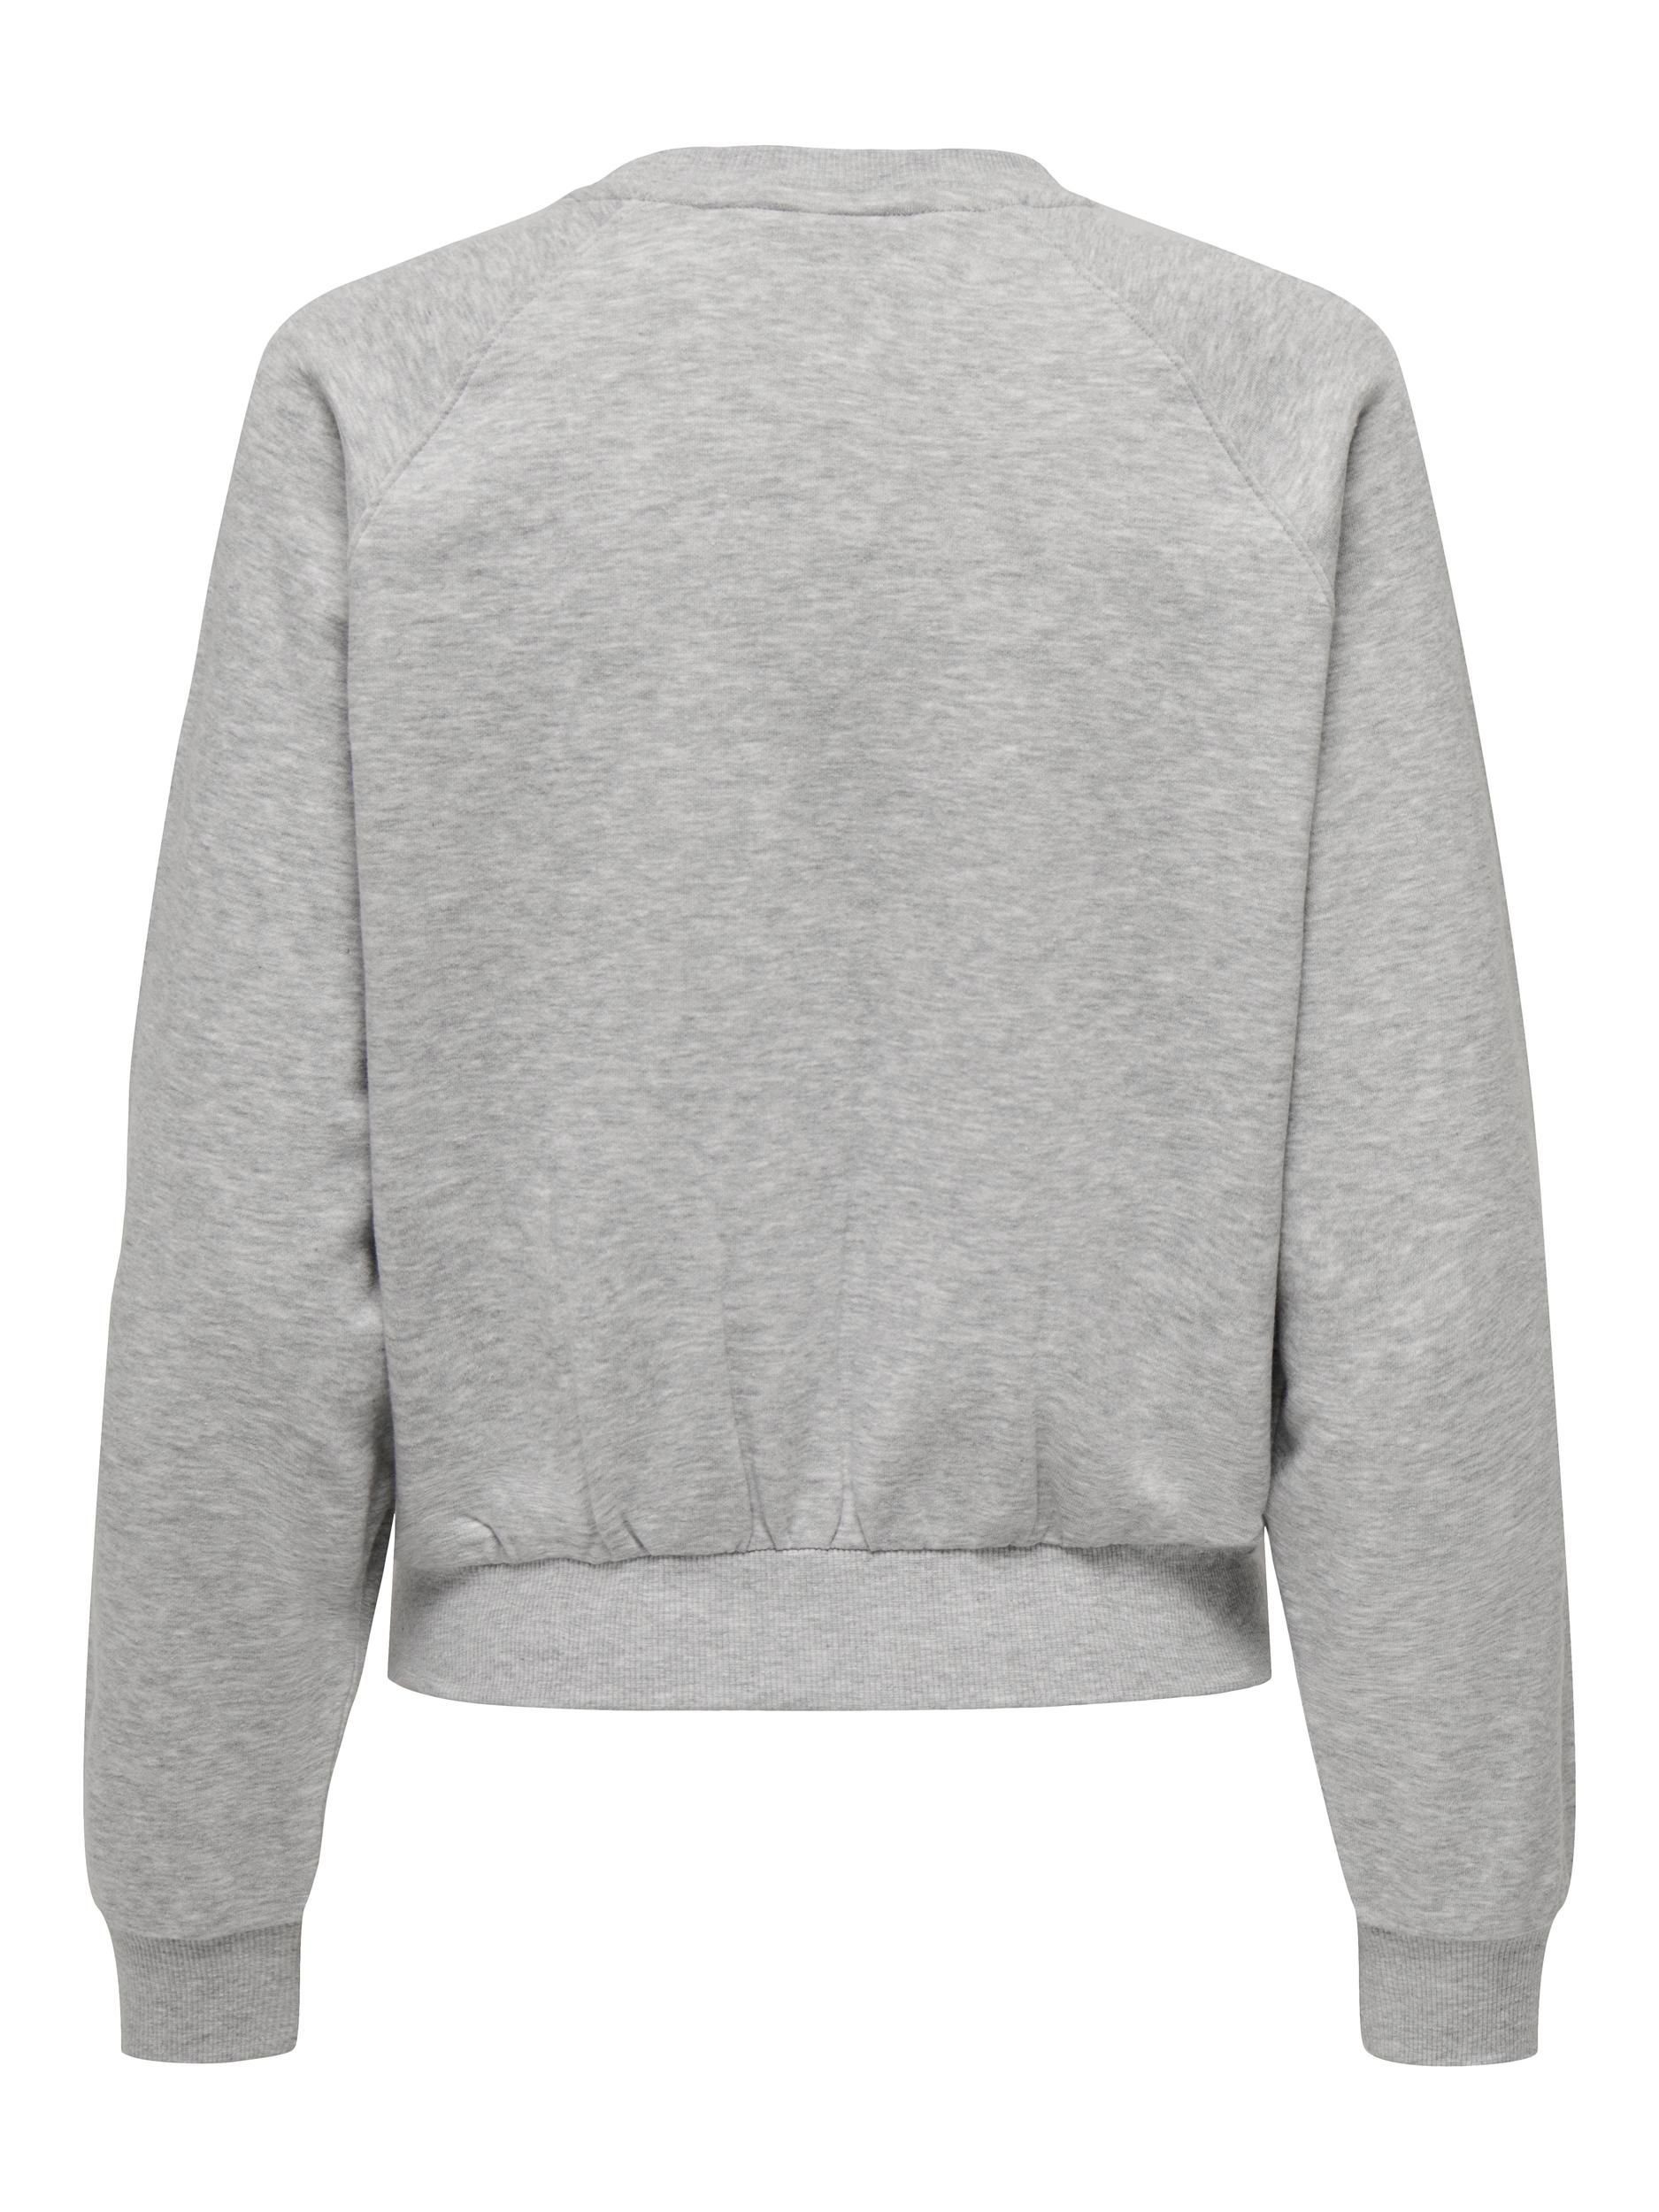 Grey ONLY Sweatshirt Light Mela